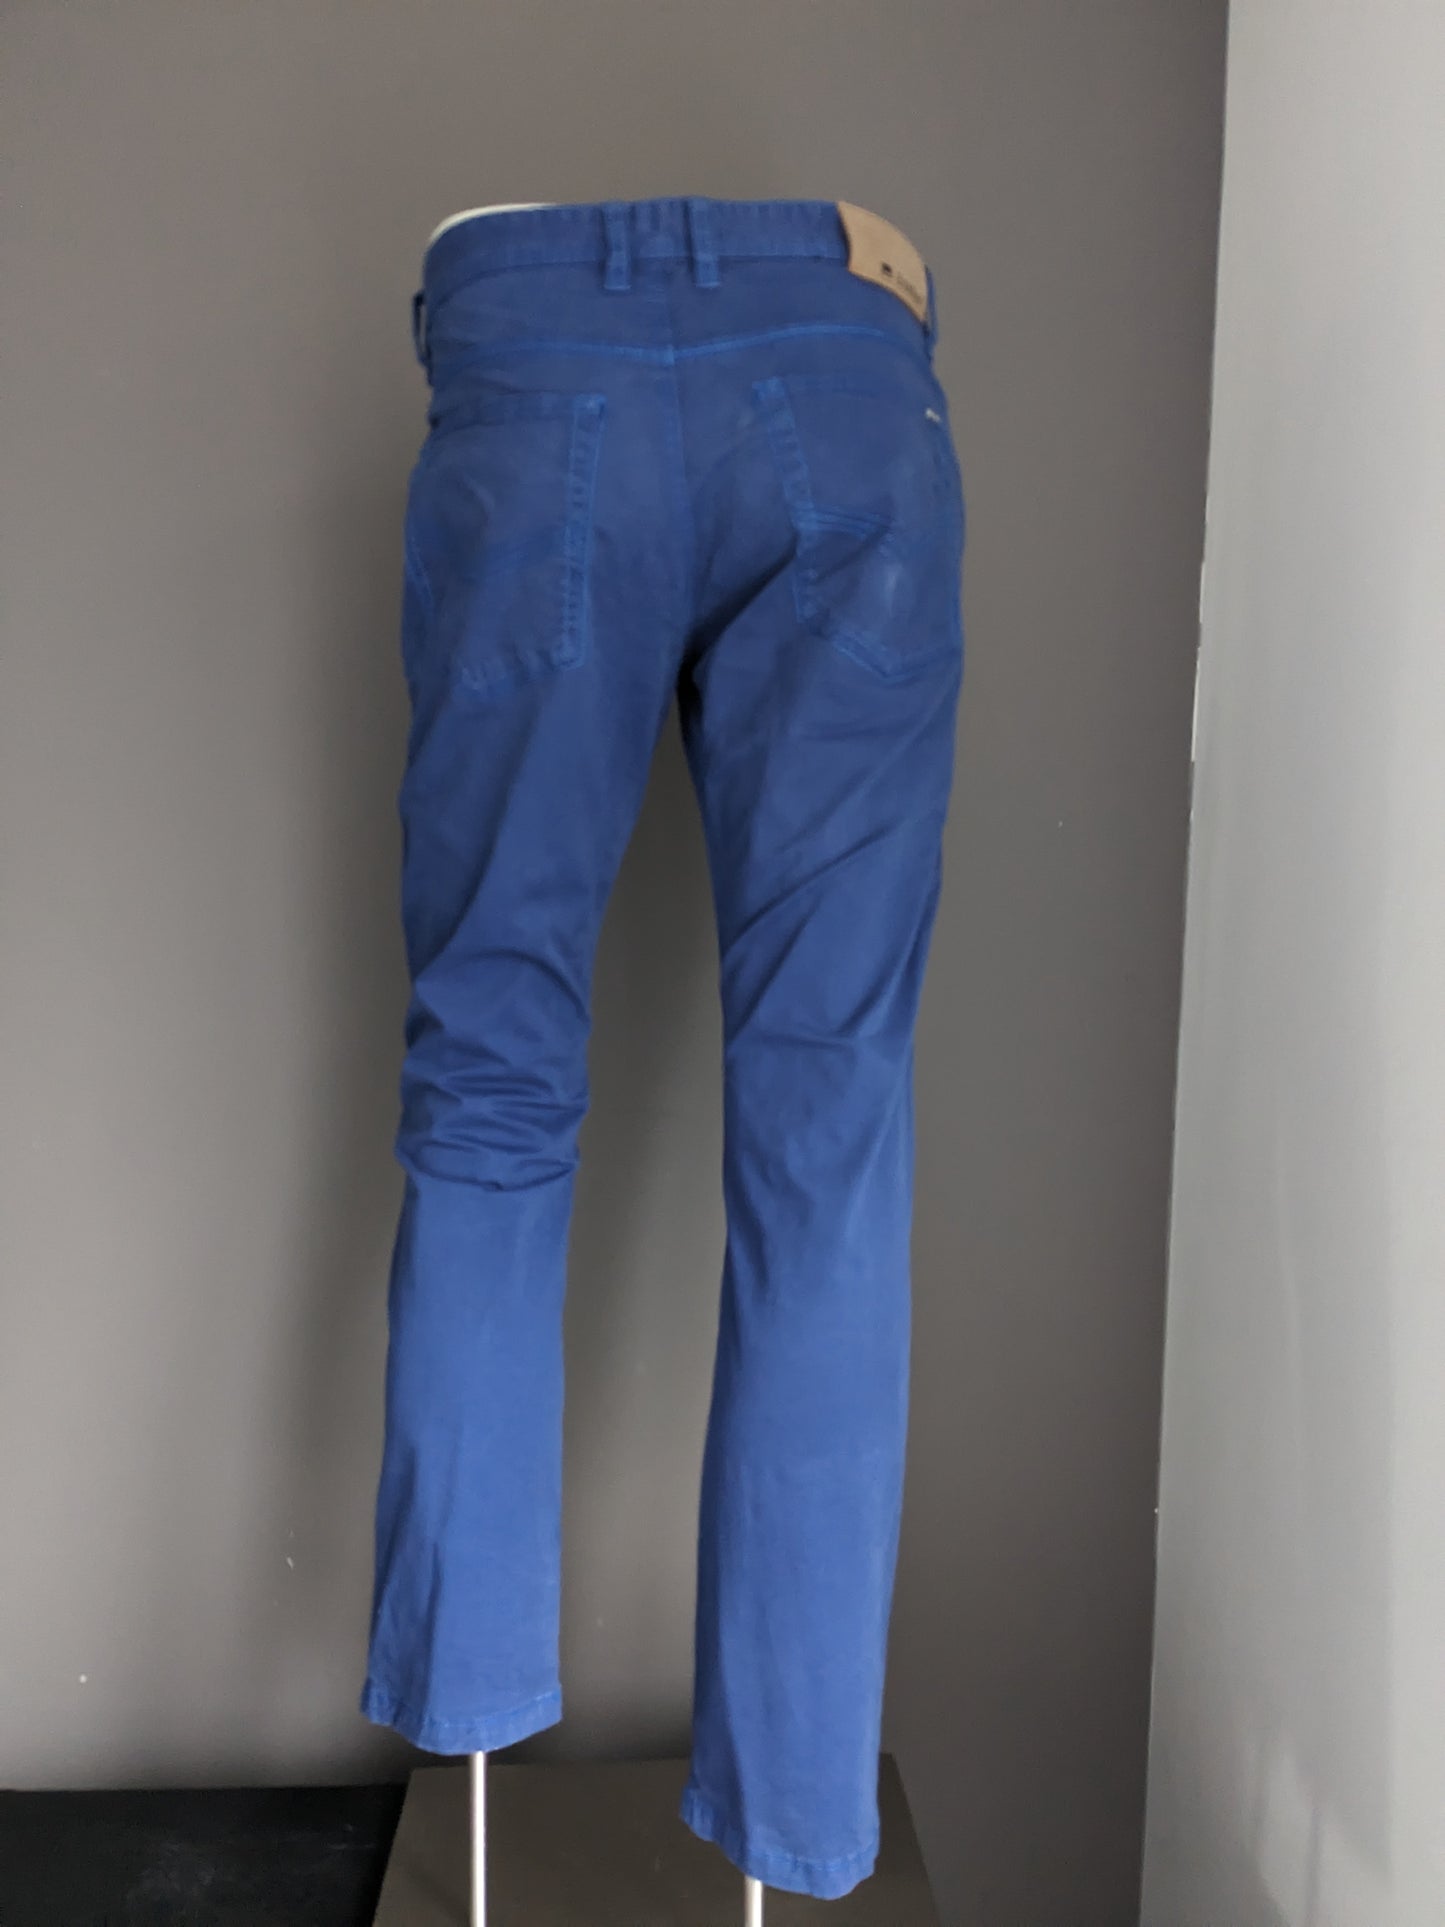 Bartlett pants / trousers. Blue. Size 24 (48) / M